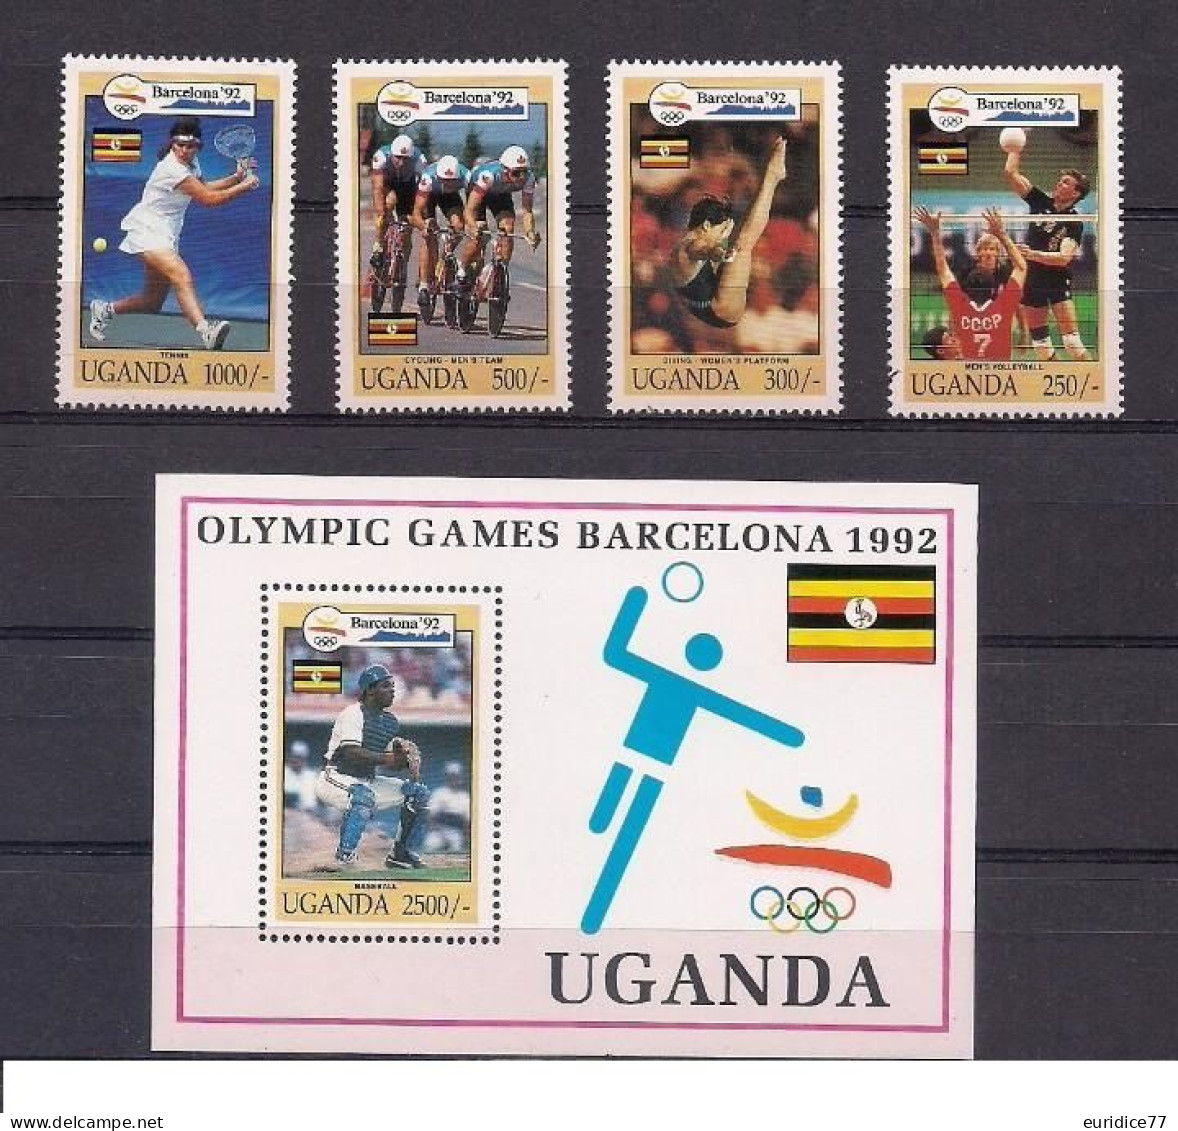 Uganda 1992 - Olympic Games Barcelona 92 Mnh** - Sommer 1992: Barcelone